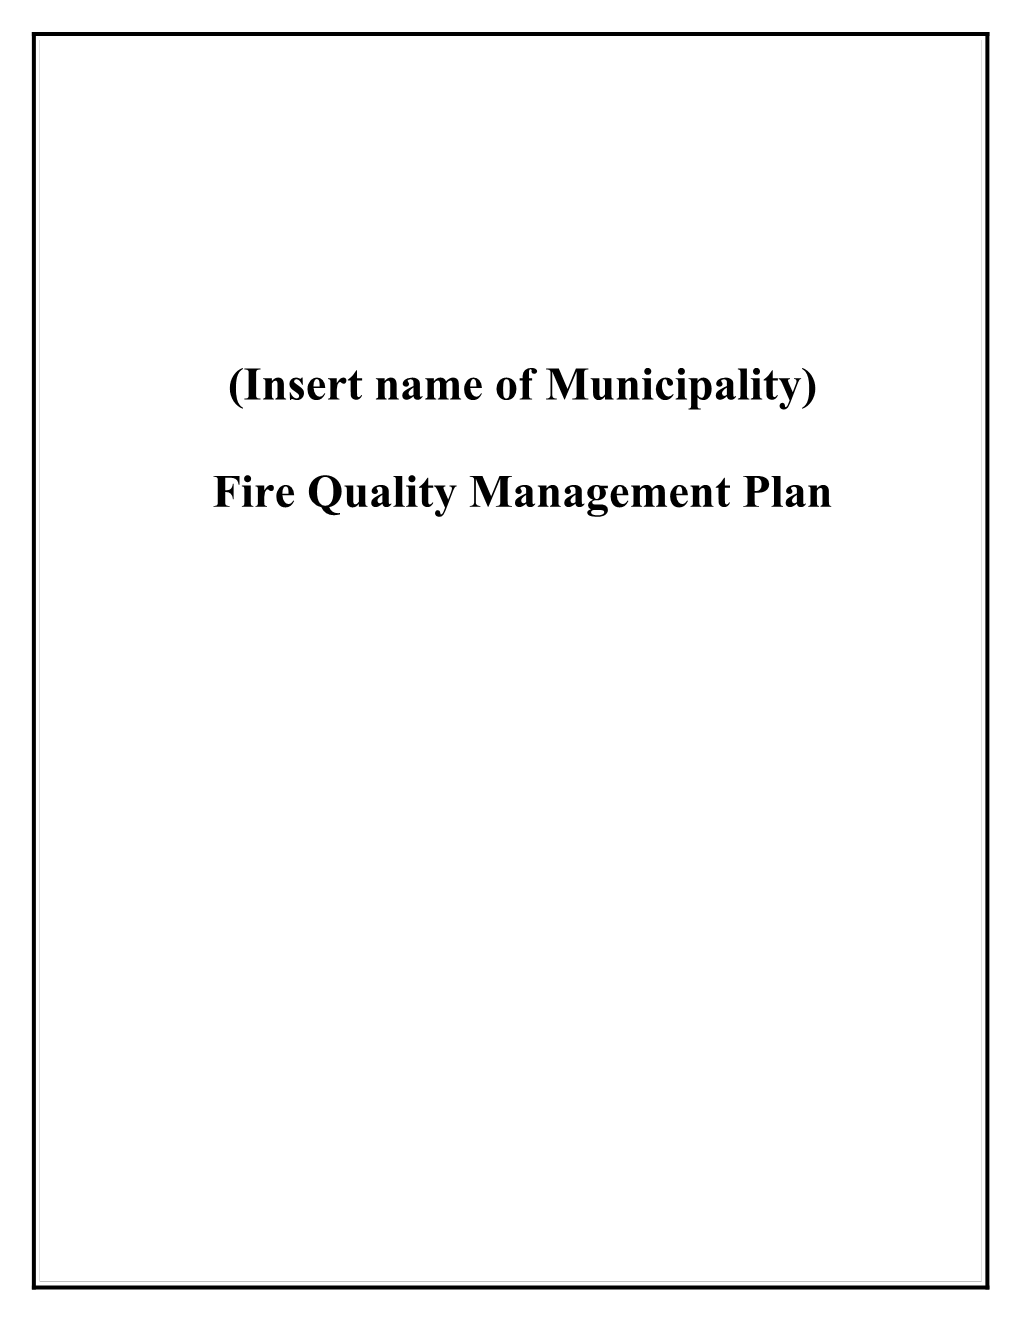 Fire Quality Management Plan